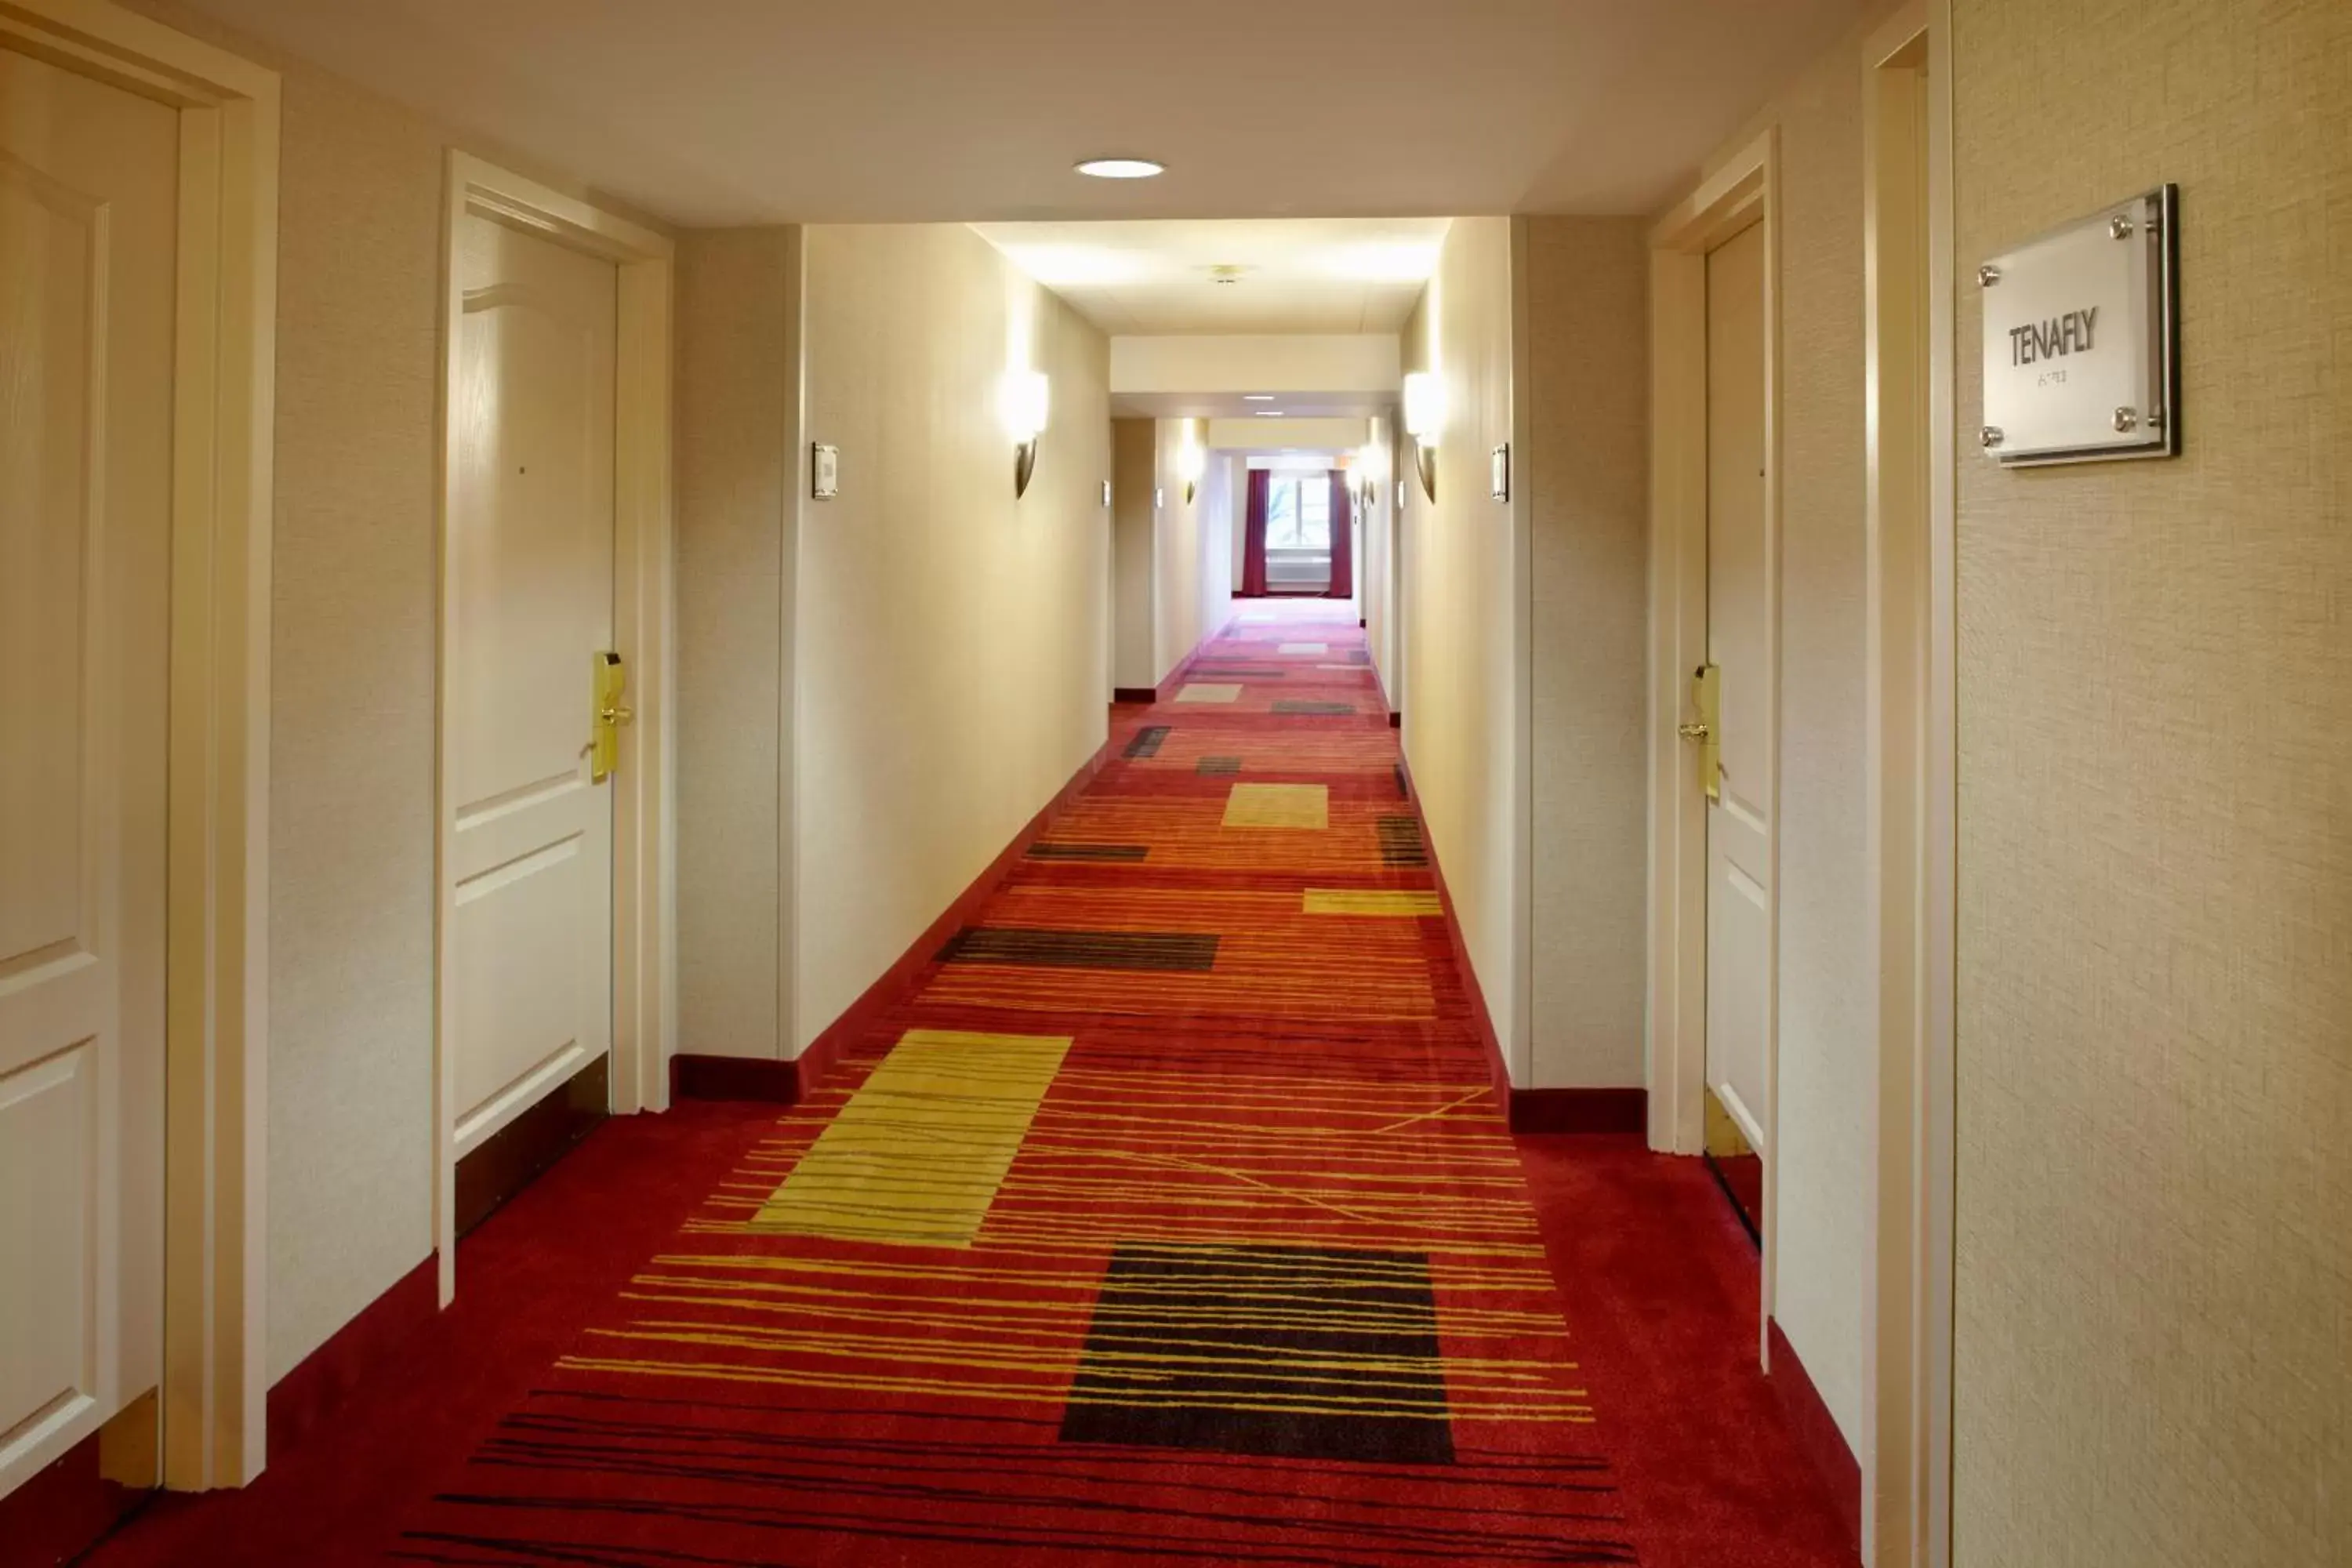 Area and facilities, Banquet Facilities in Clinton Inn Hotel Tenafly